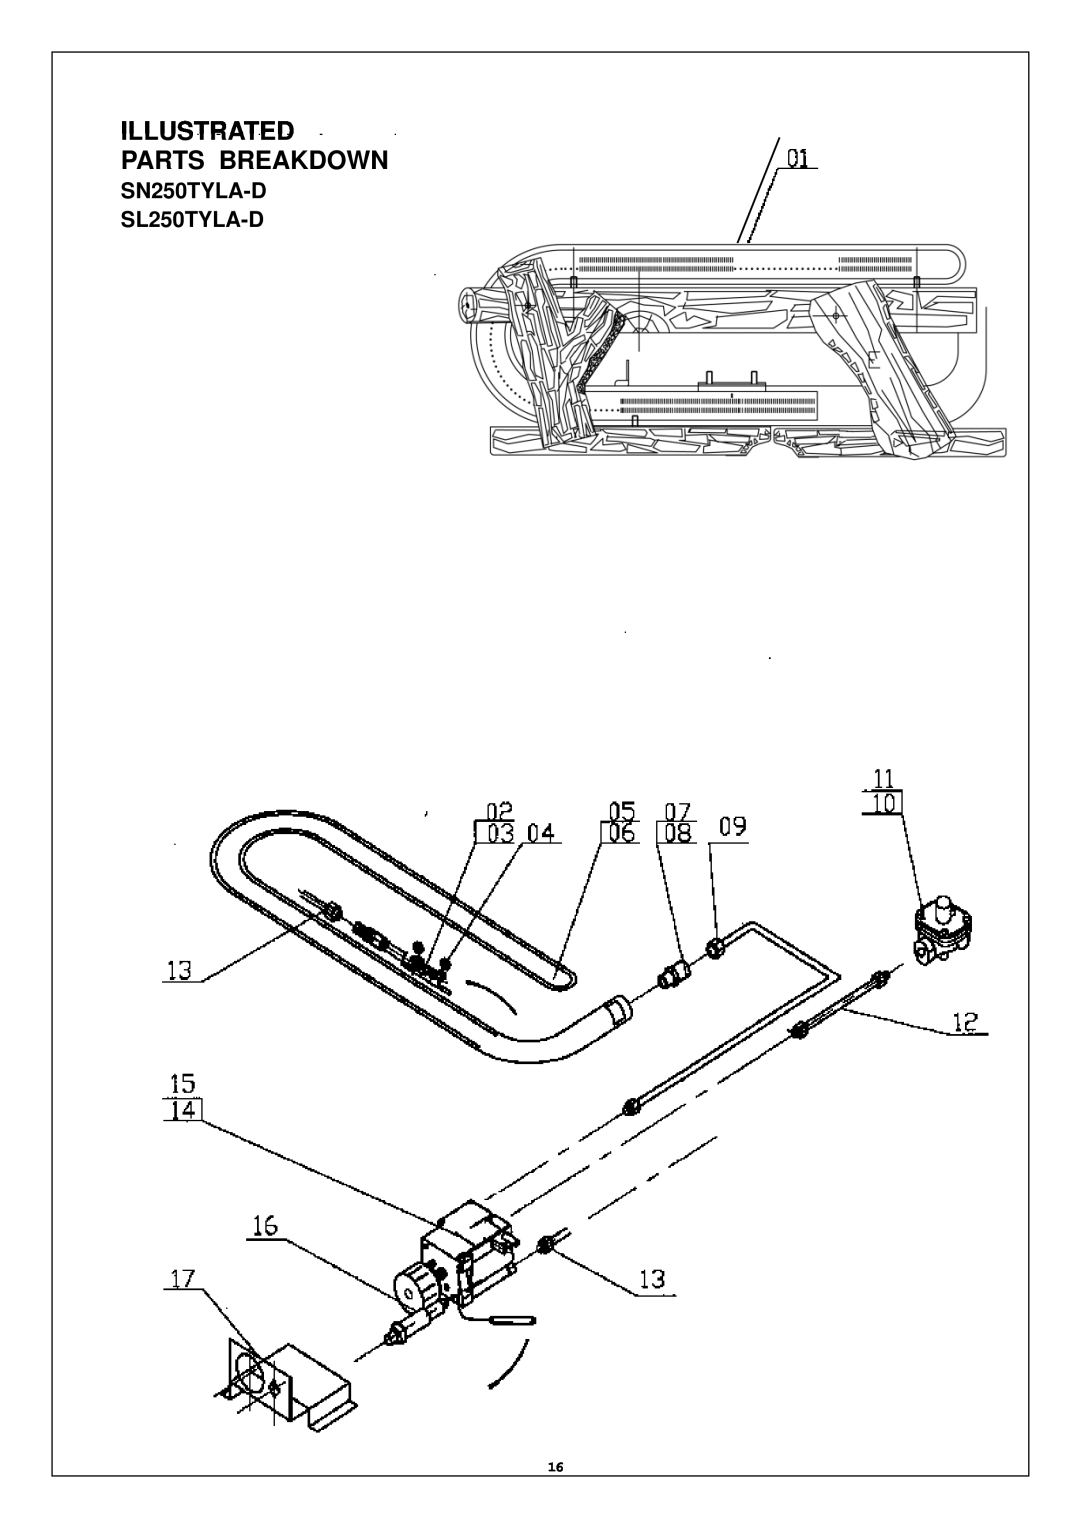 Procom installation manual Illustrated Parts Breakdown, SN250TYLA-D SL250TYLA-D 